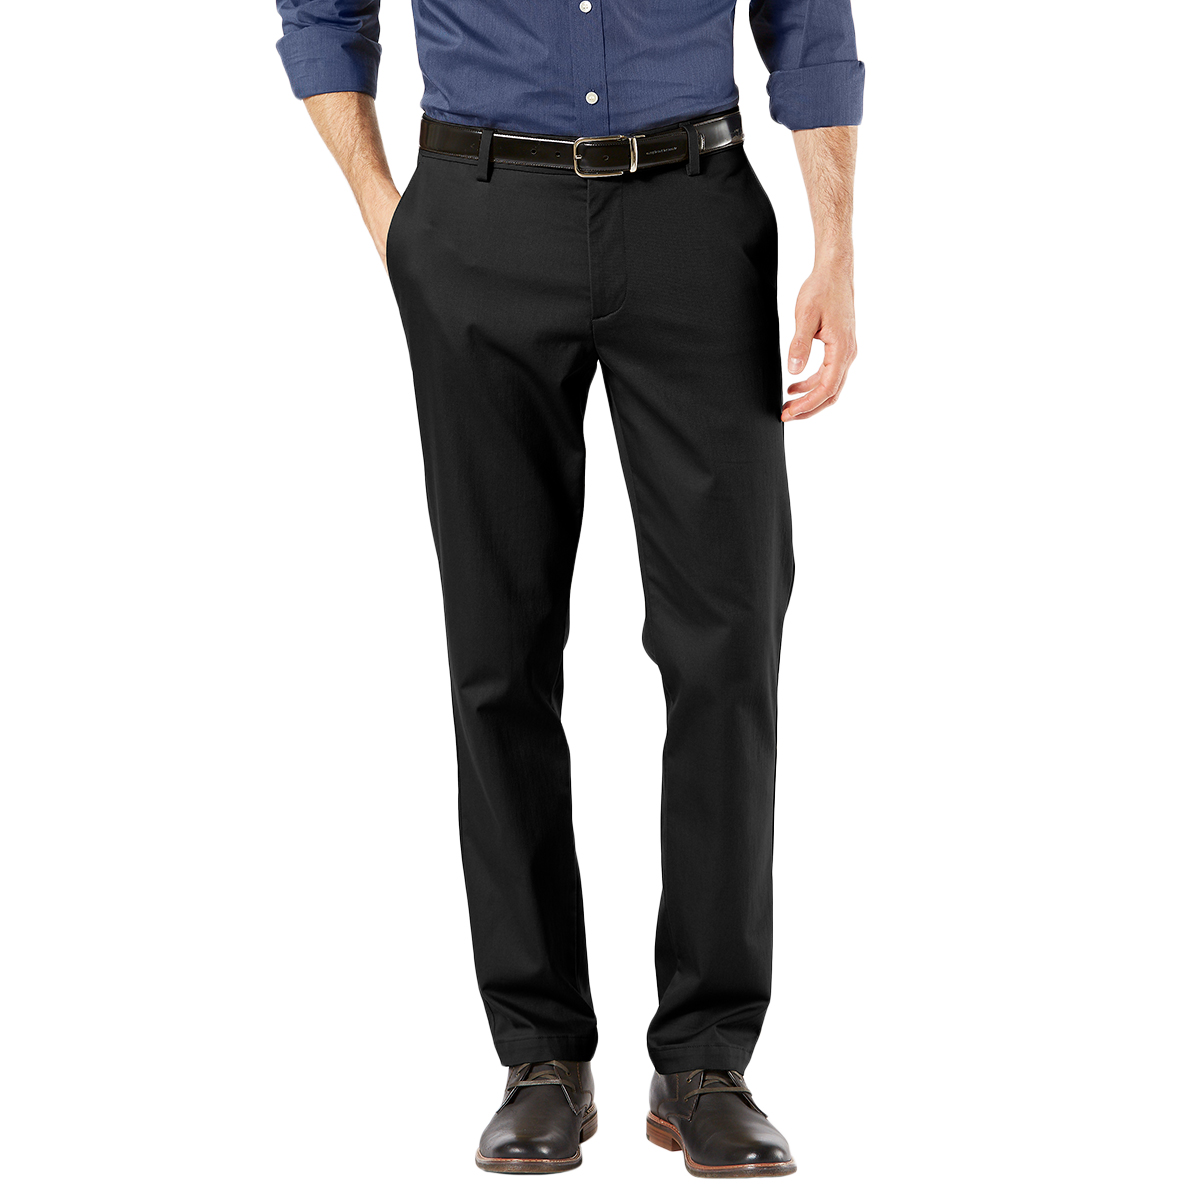 Dockers Men's Signature Khaki 2.0 Stretch Straight Taper Flat-Front Creaseless Pants - Black, 33/30